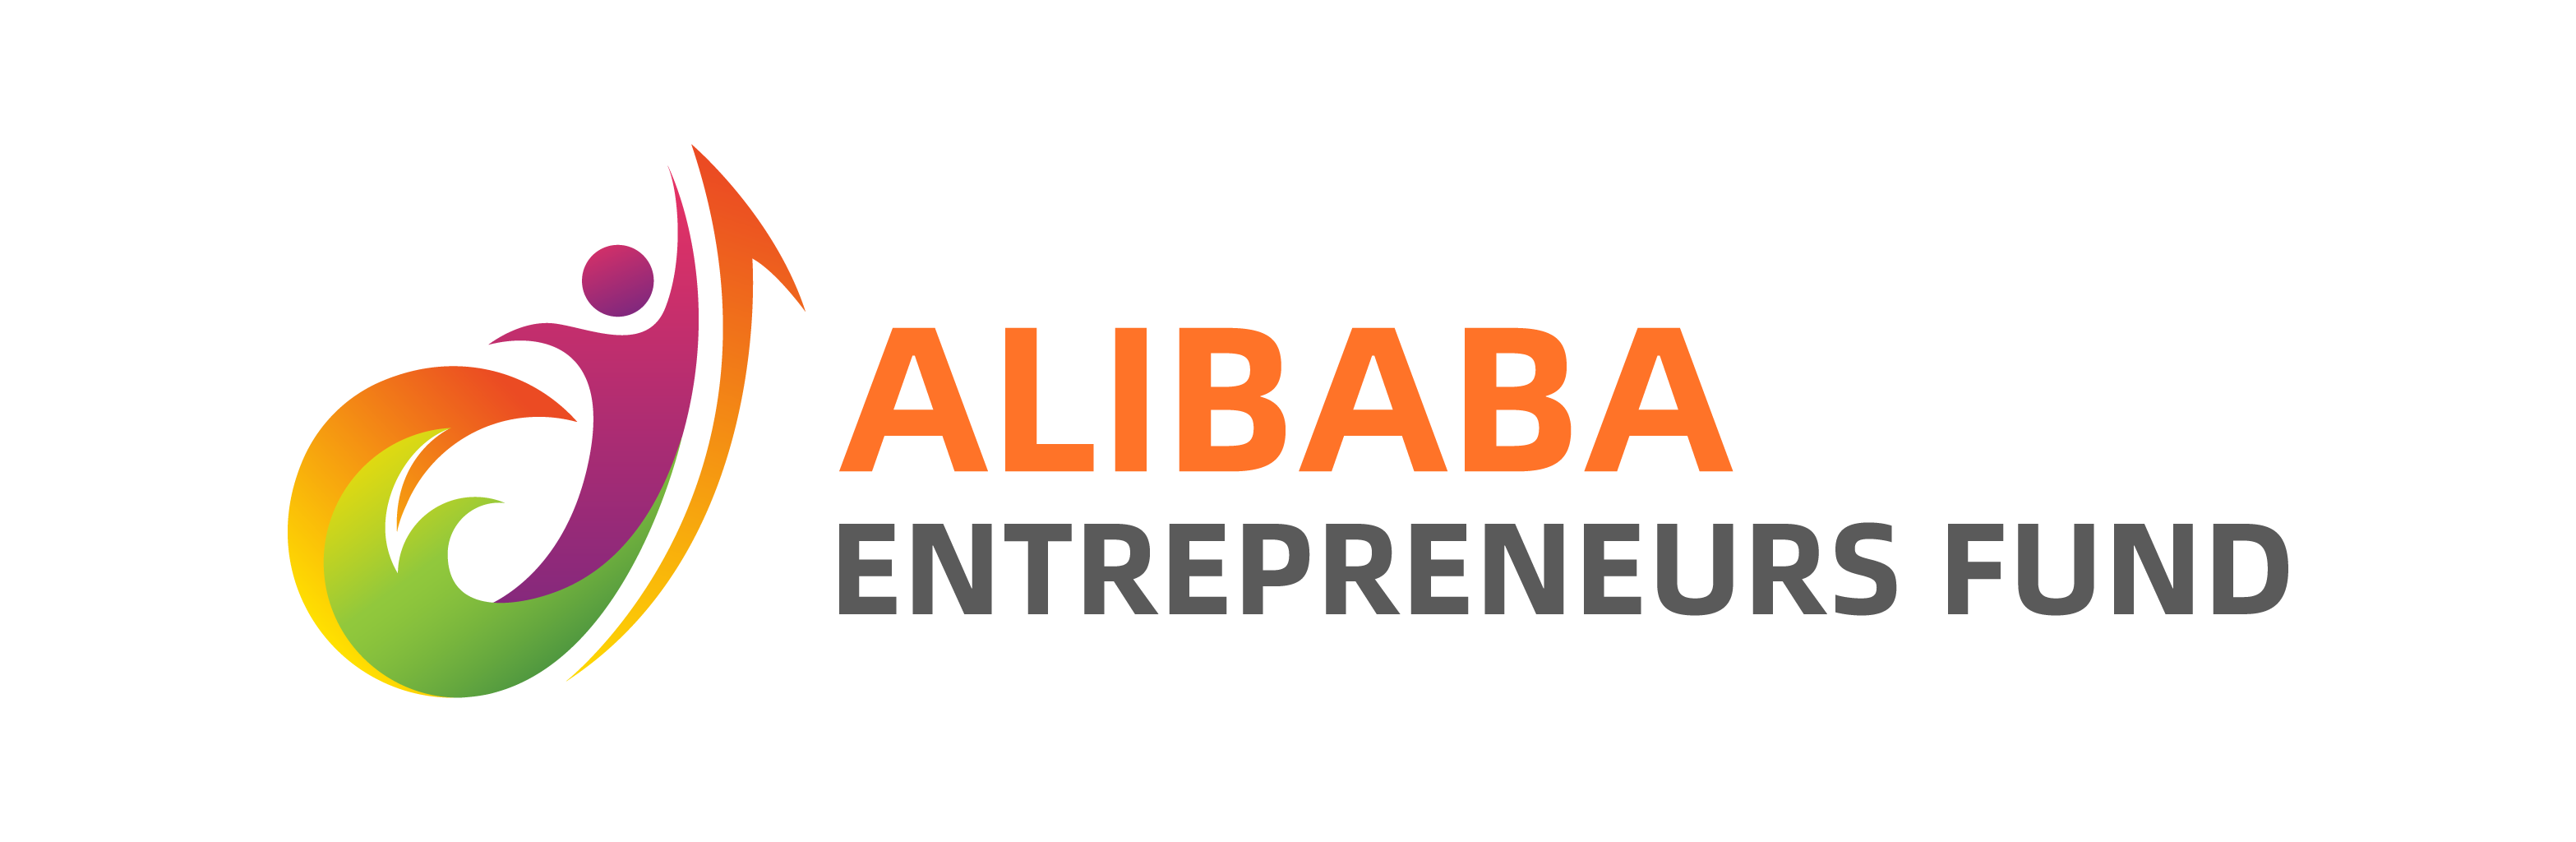 ALIBABA Entrepreneurs Fund